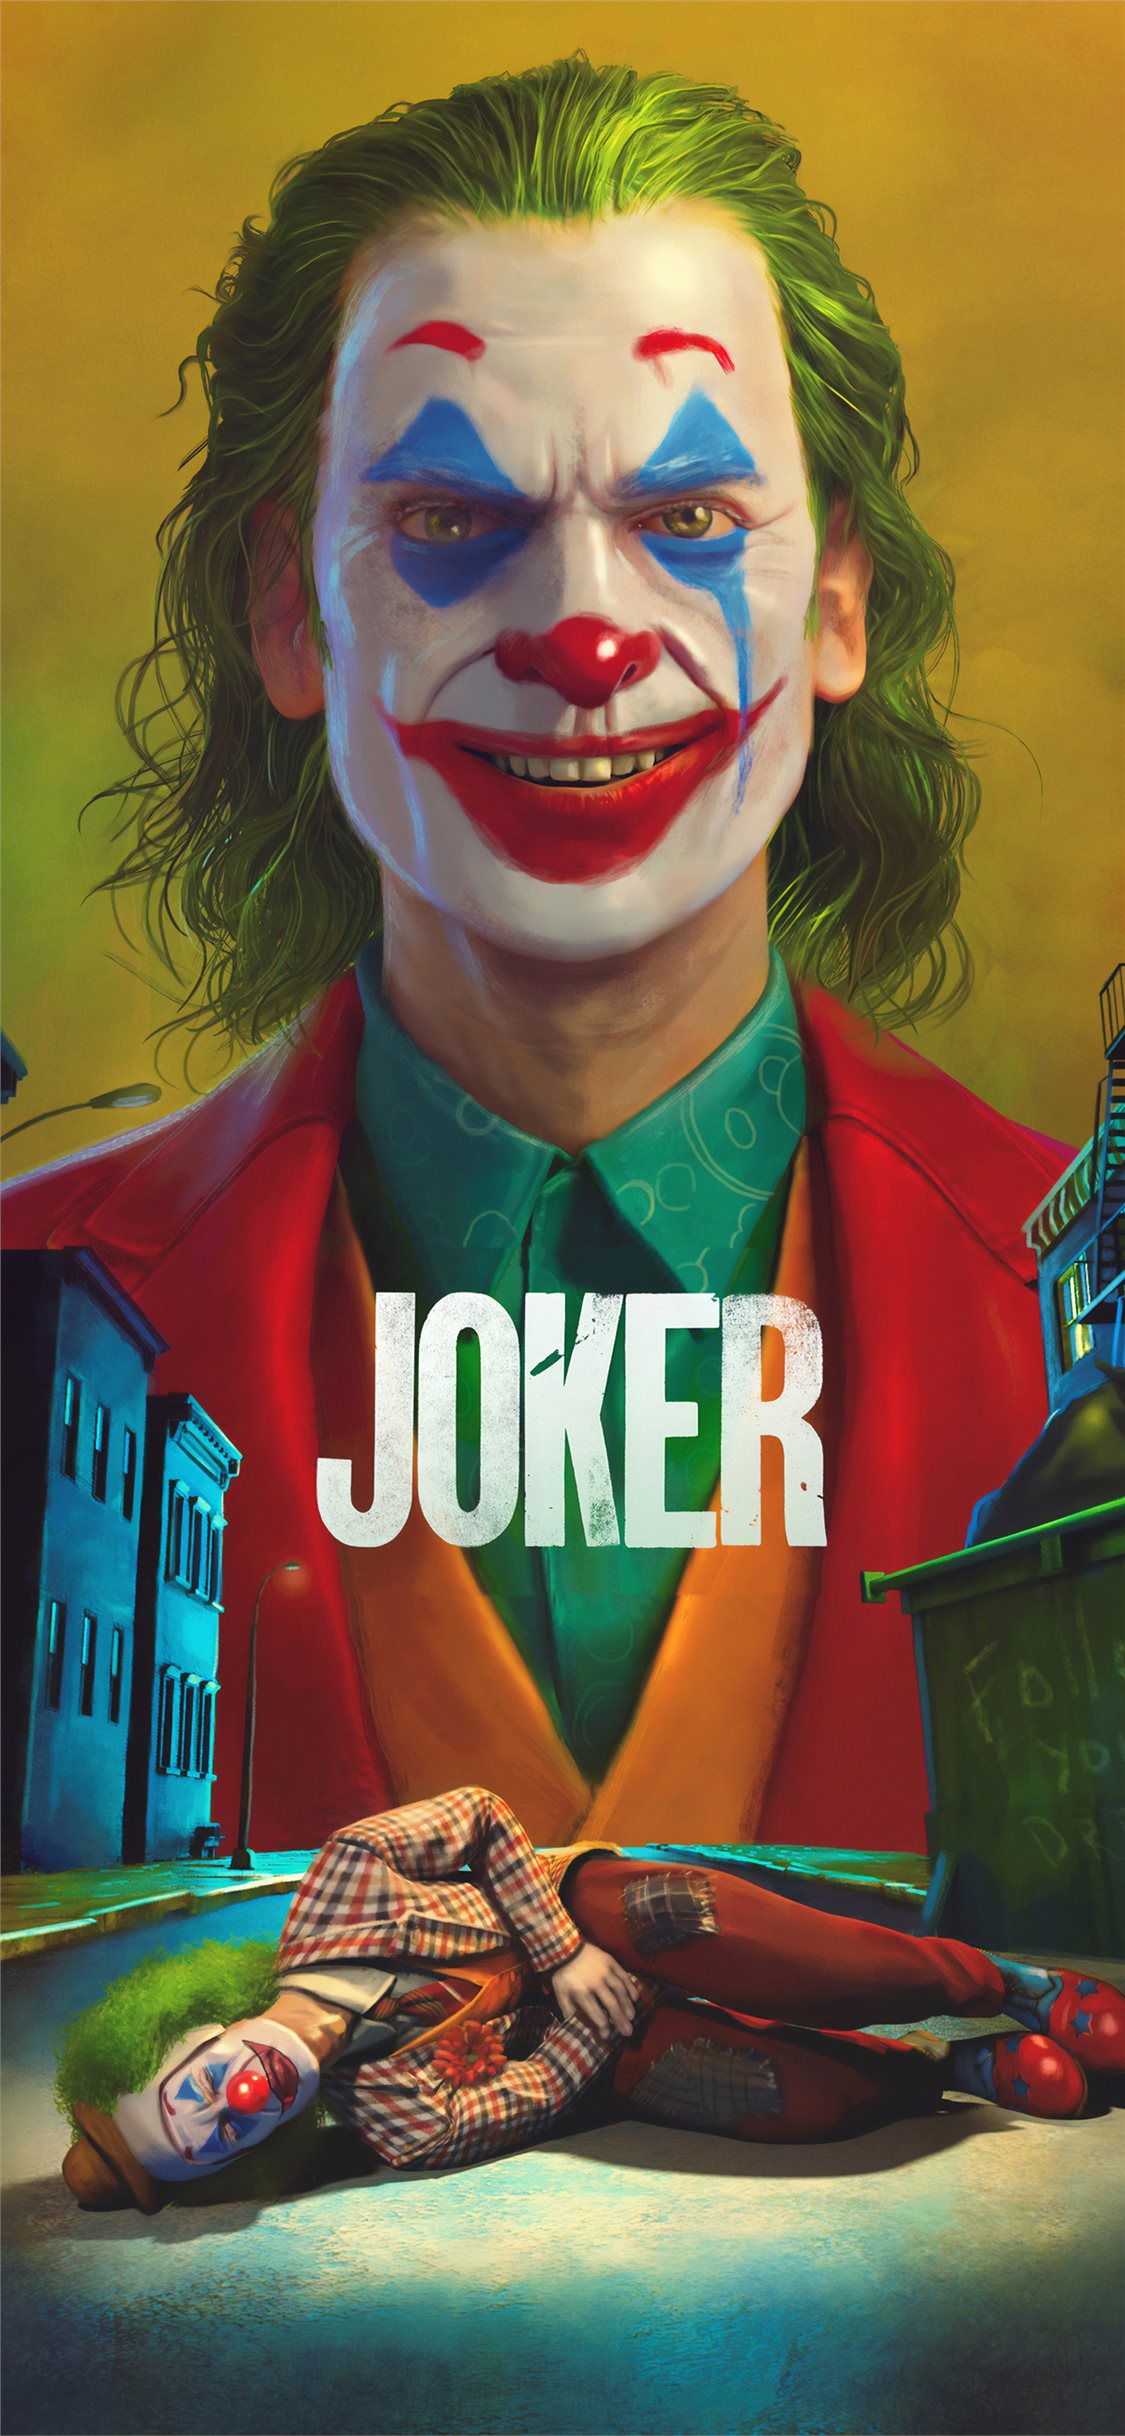 joker movie4k art iPhone X Wallpapers Free Download